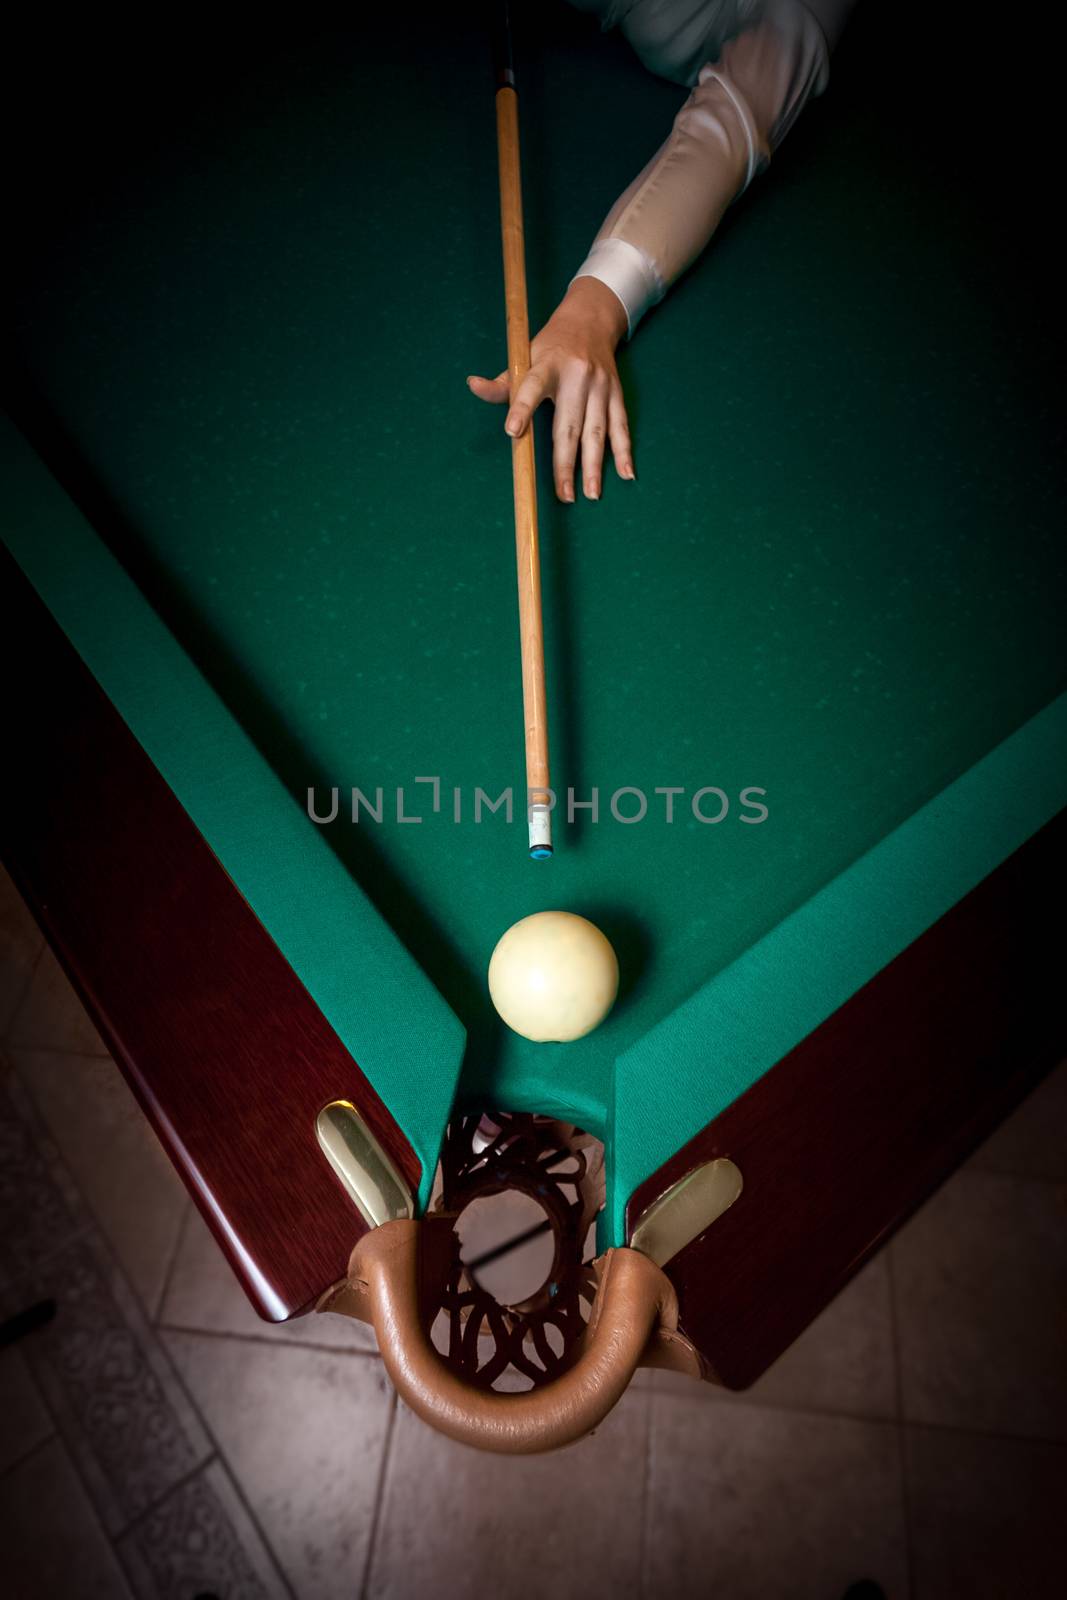 Woman aiming at billiard pocket by Kryzhov